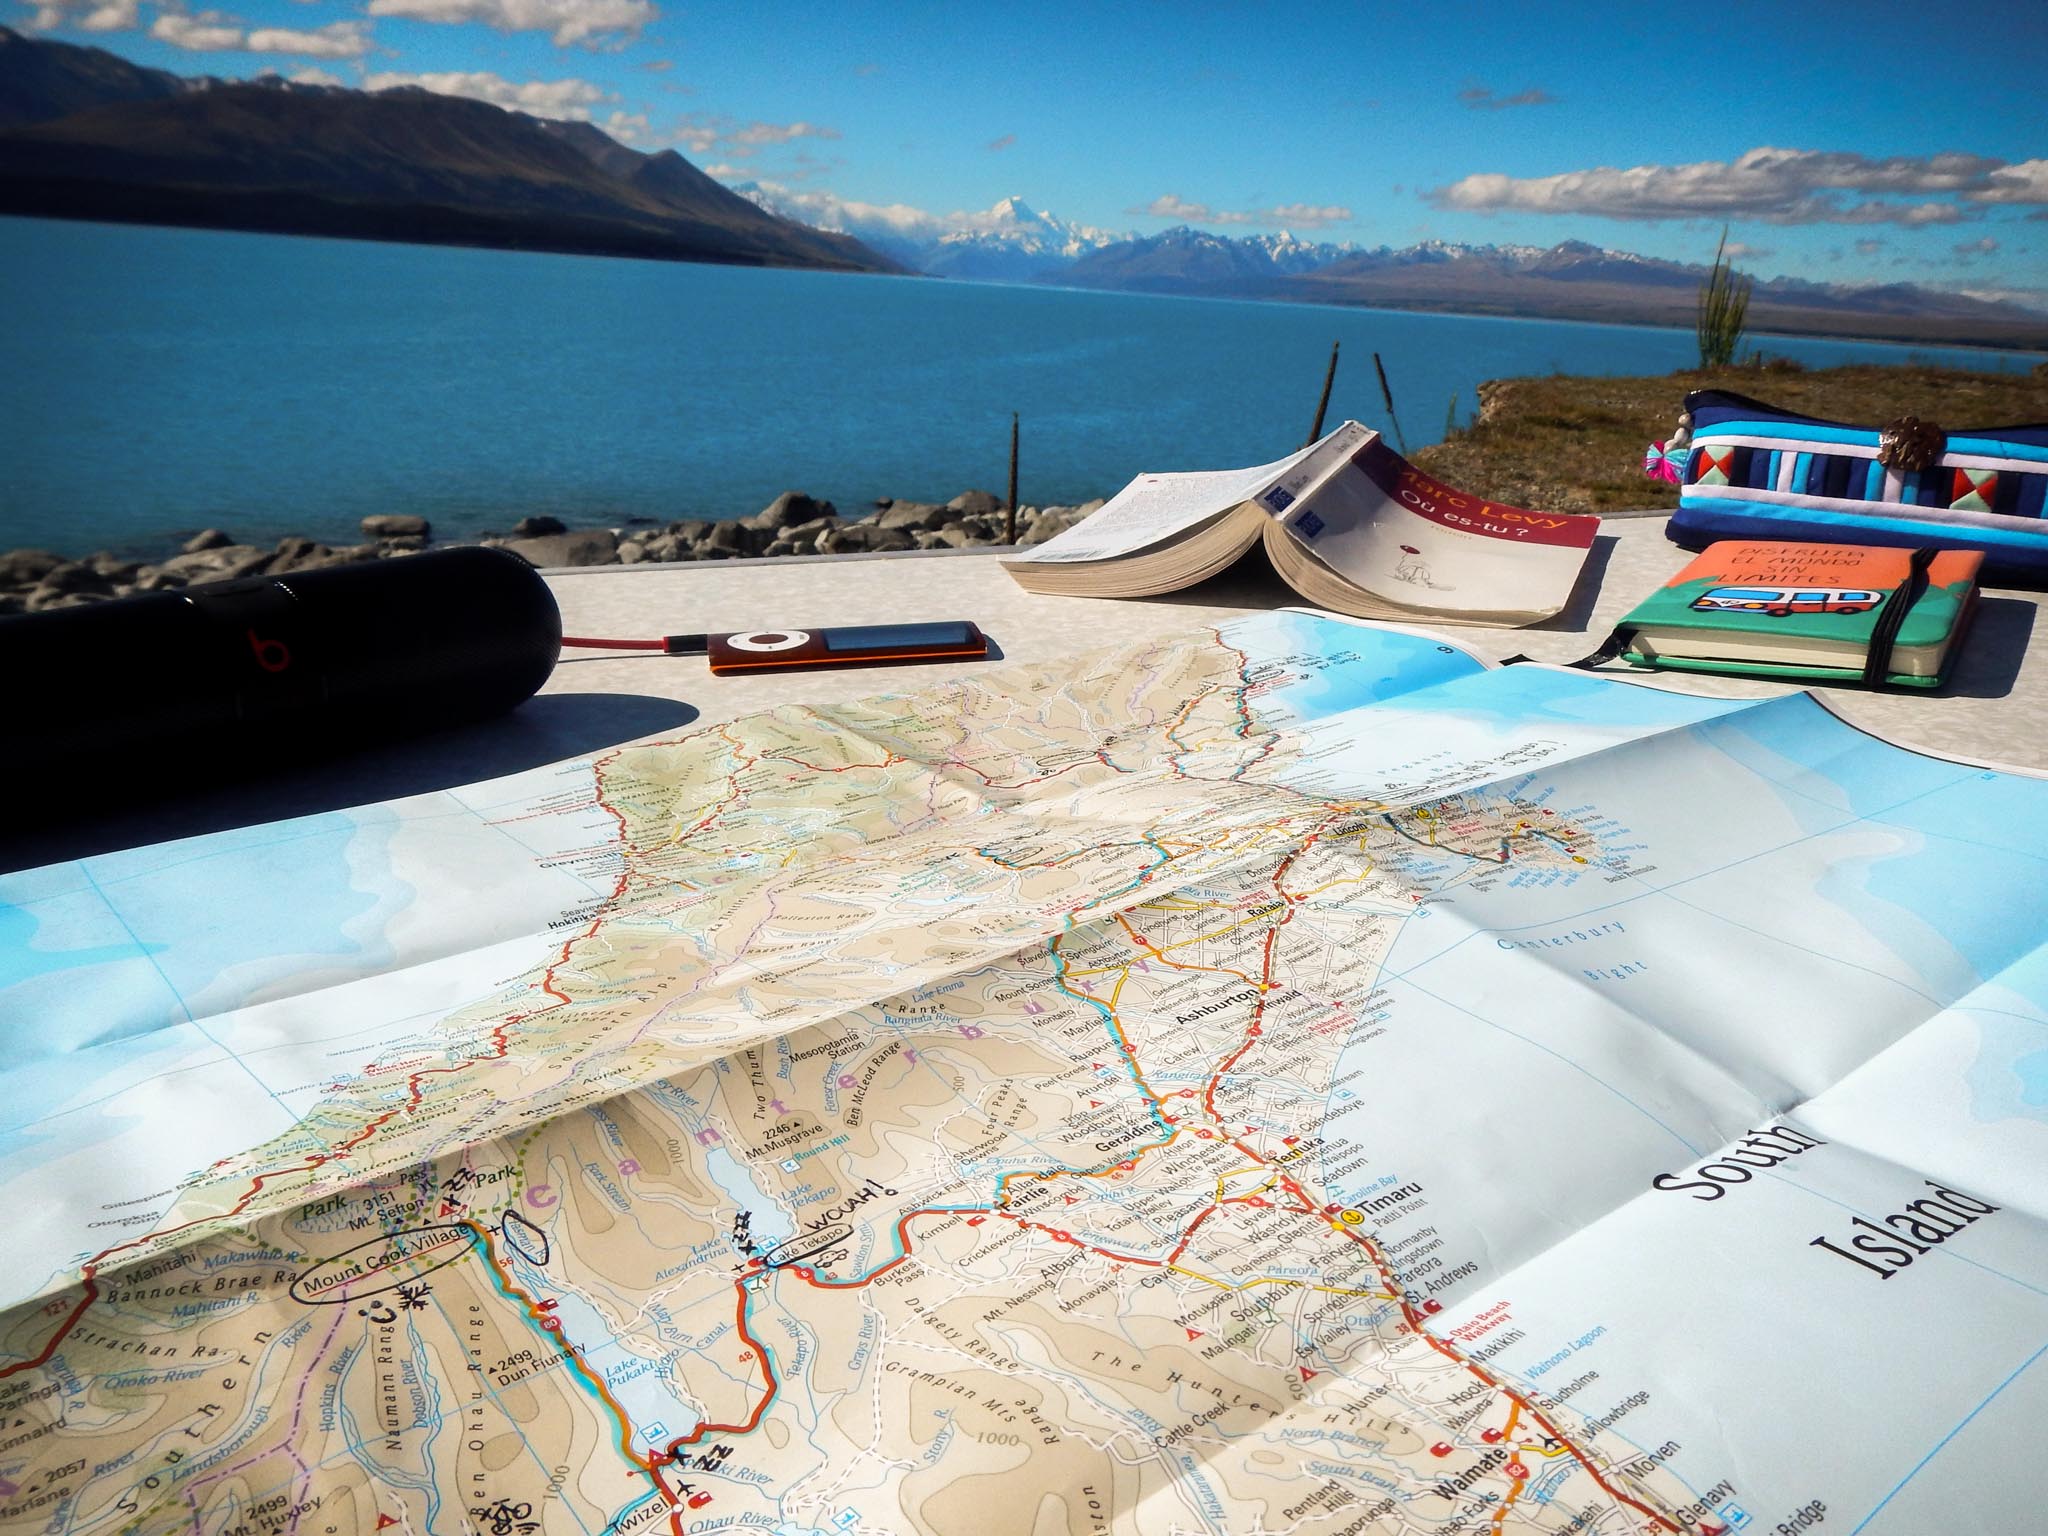 Déborah Motsch: mountainbiken in Nieuw-Zeeland, mijn reisgids!